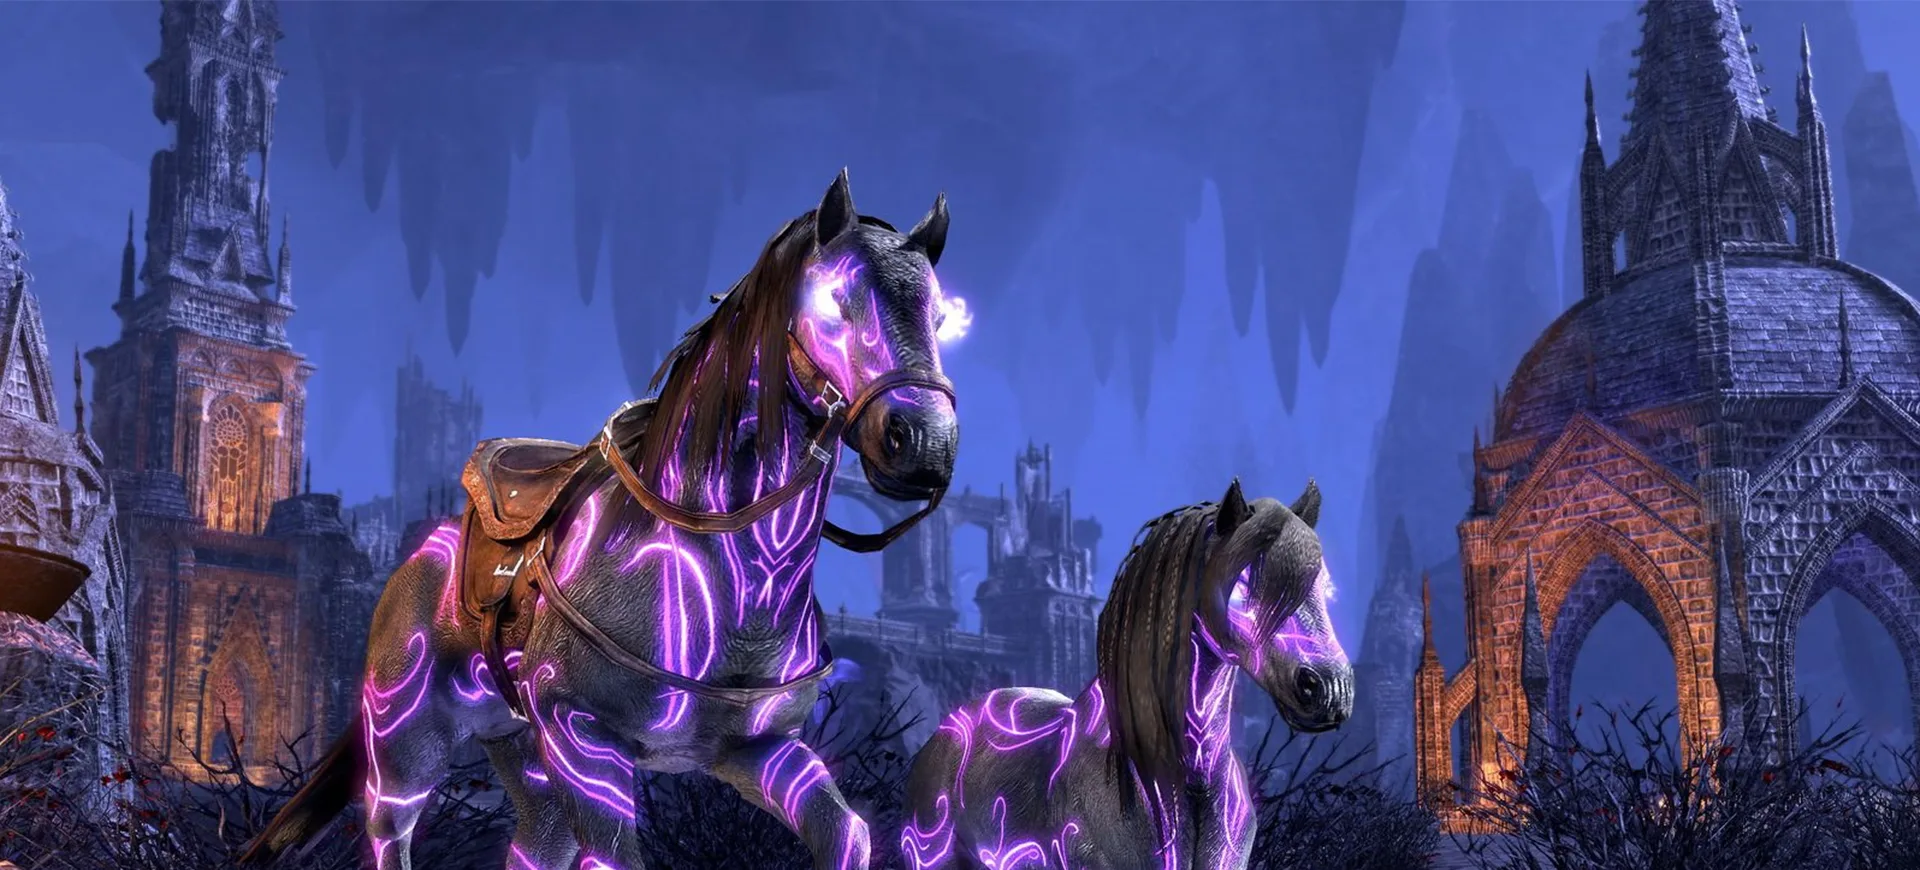 Twitch Prime会员尊享独特 Elder Scrolls Online 宠物和坐骑